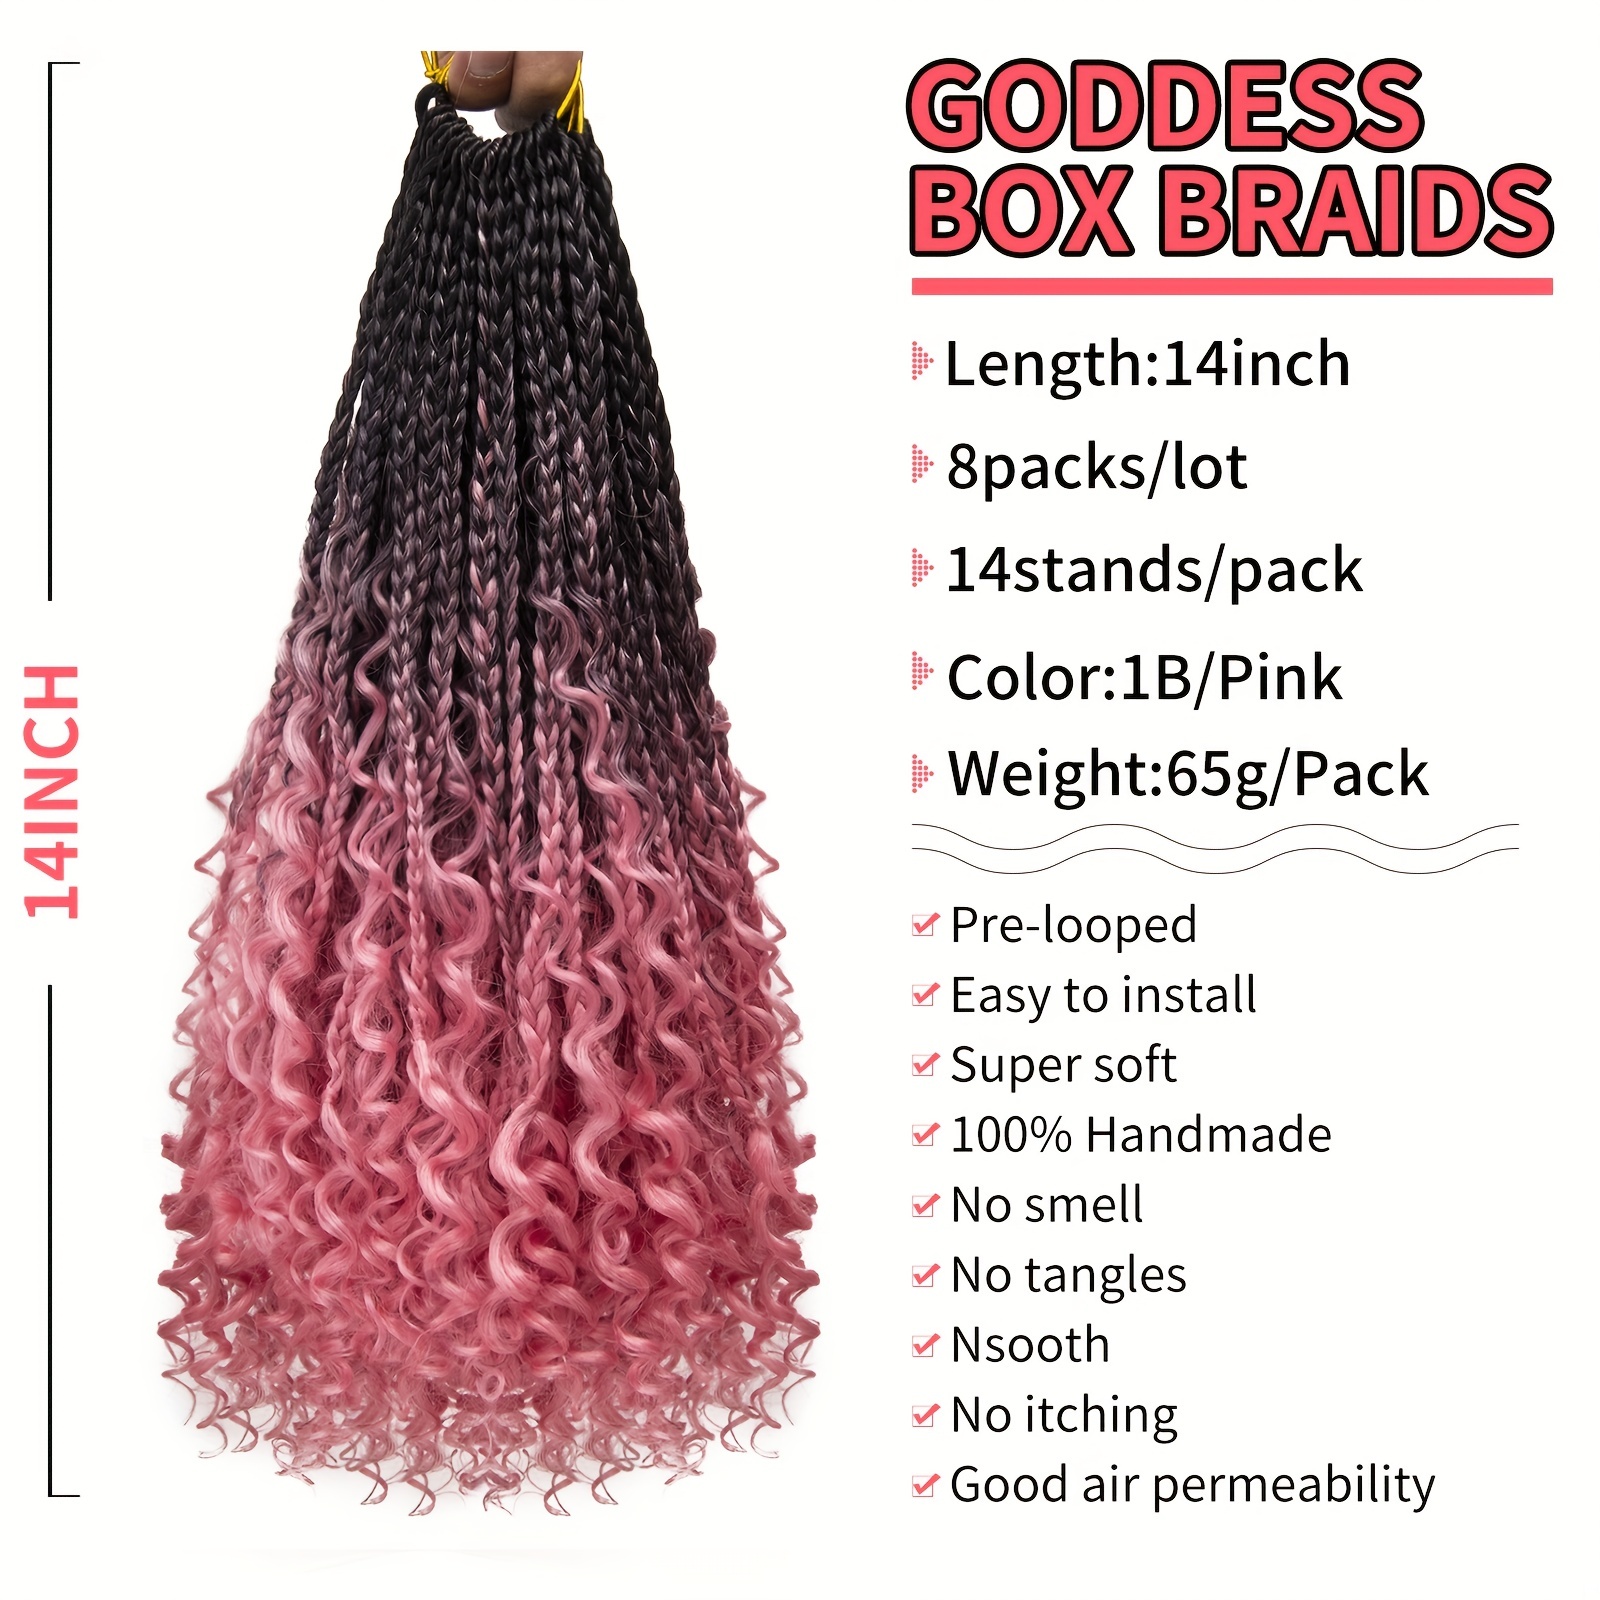 Three-strand braided hair band】Hand crocheted hair band - Shop greenorange  Headbands - Pinkoi